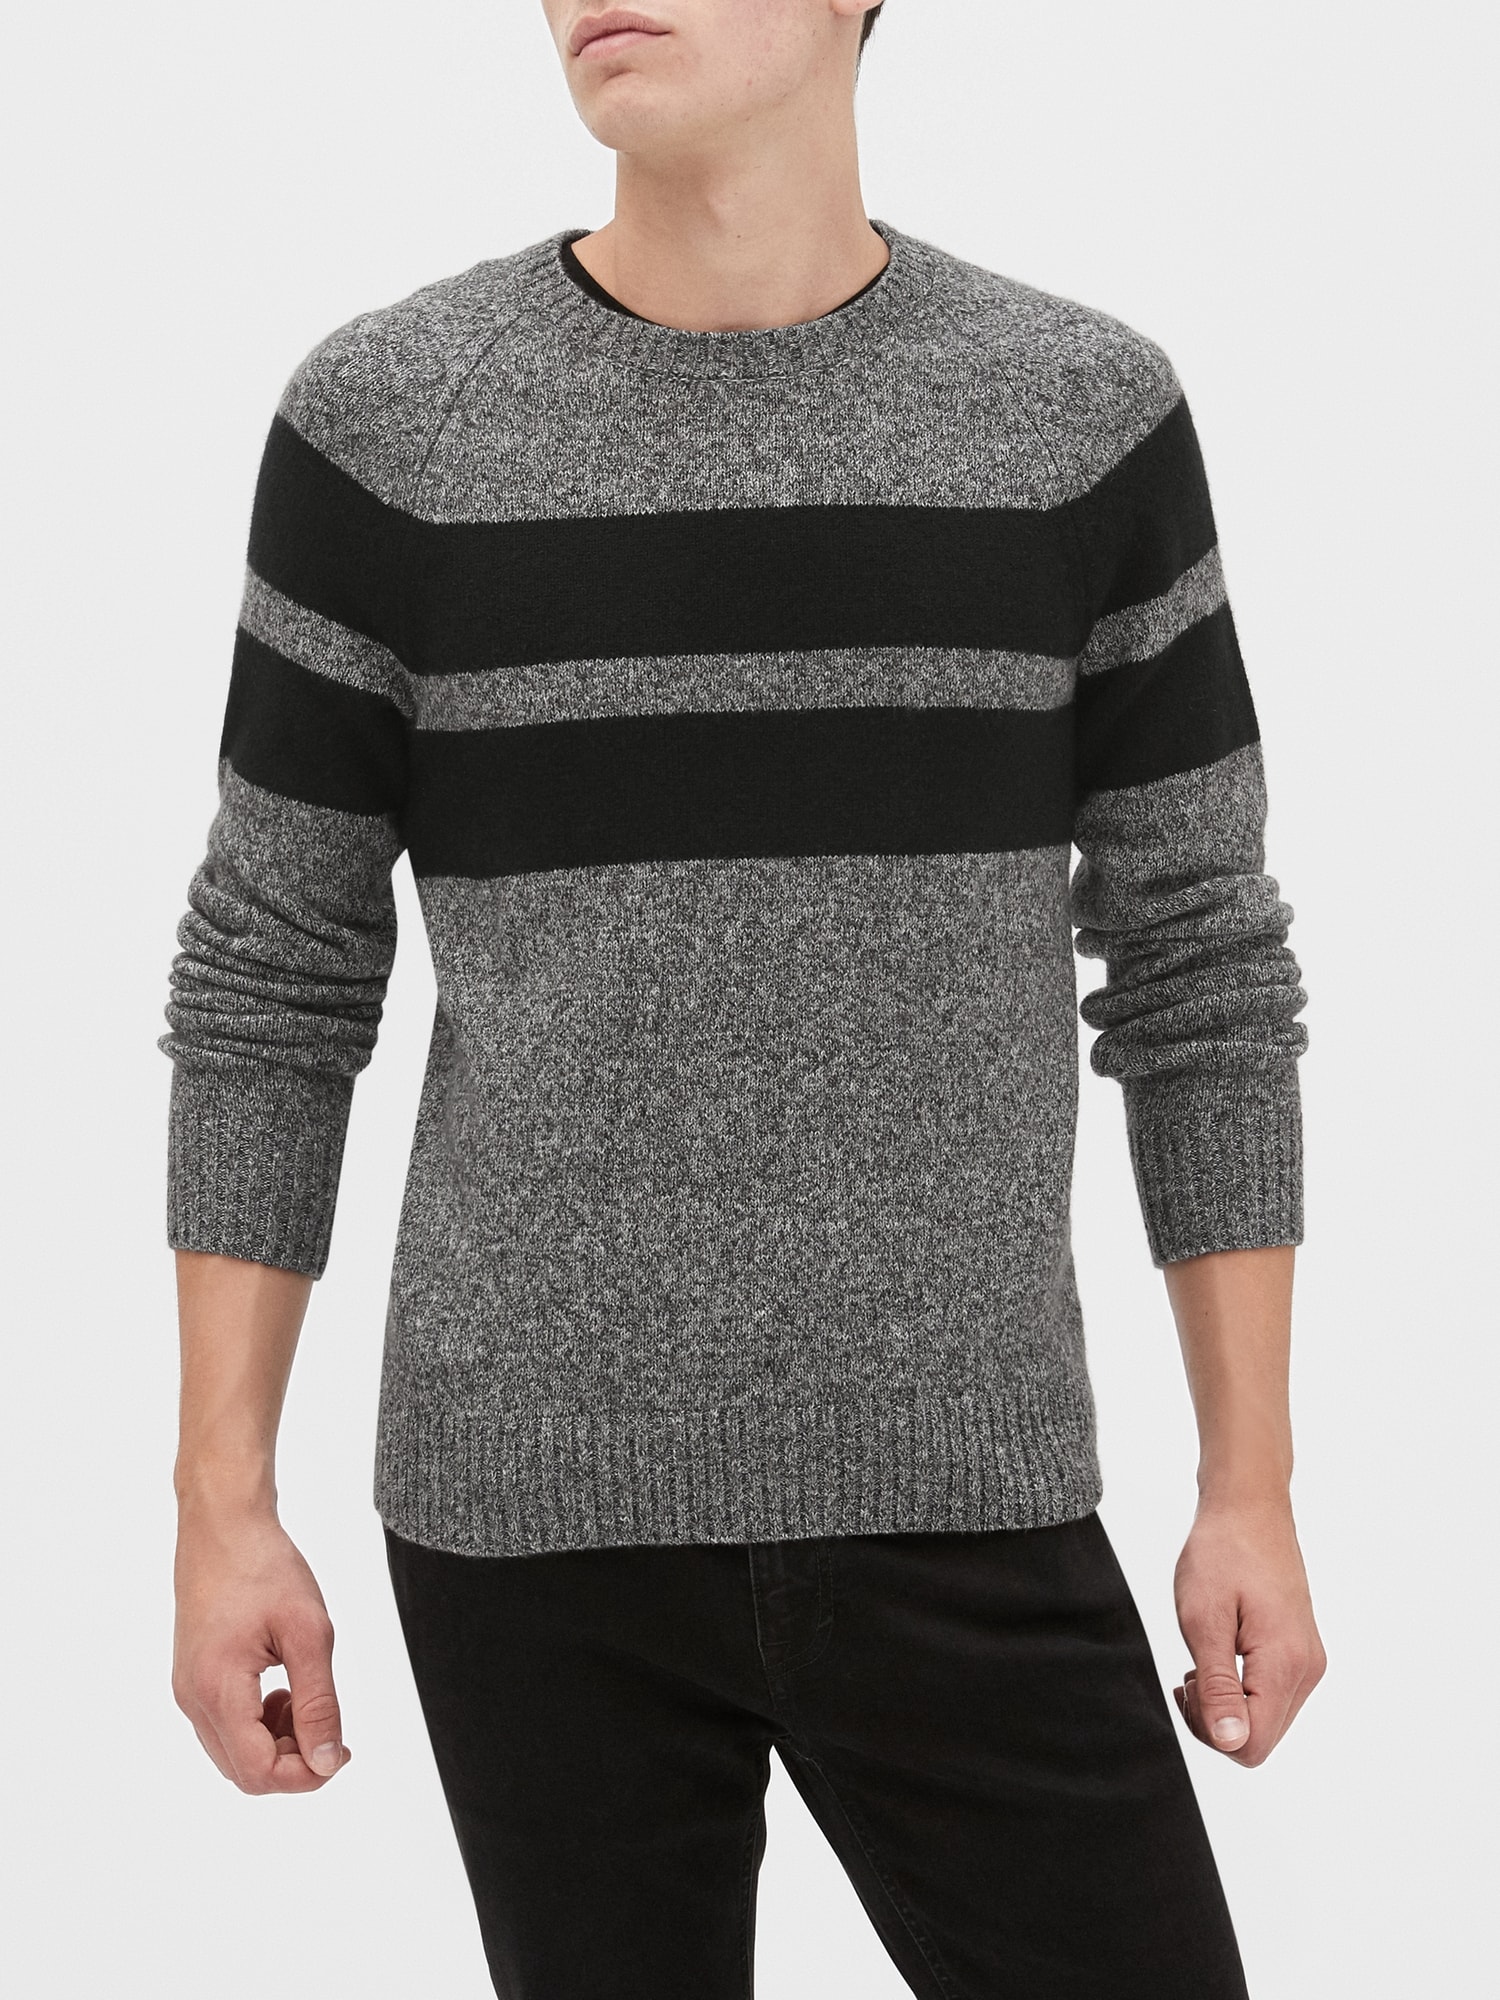 Cozy Varsity Stripe Sweater